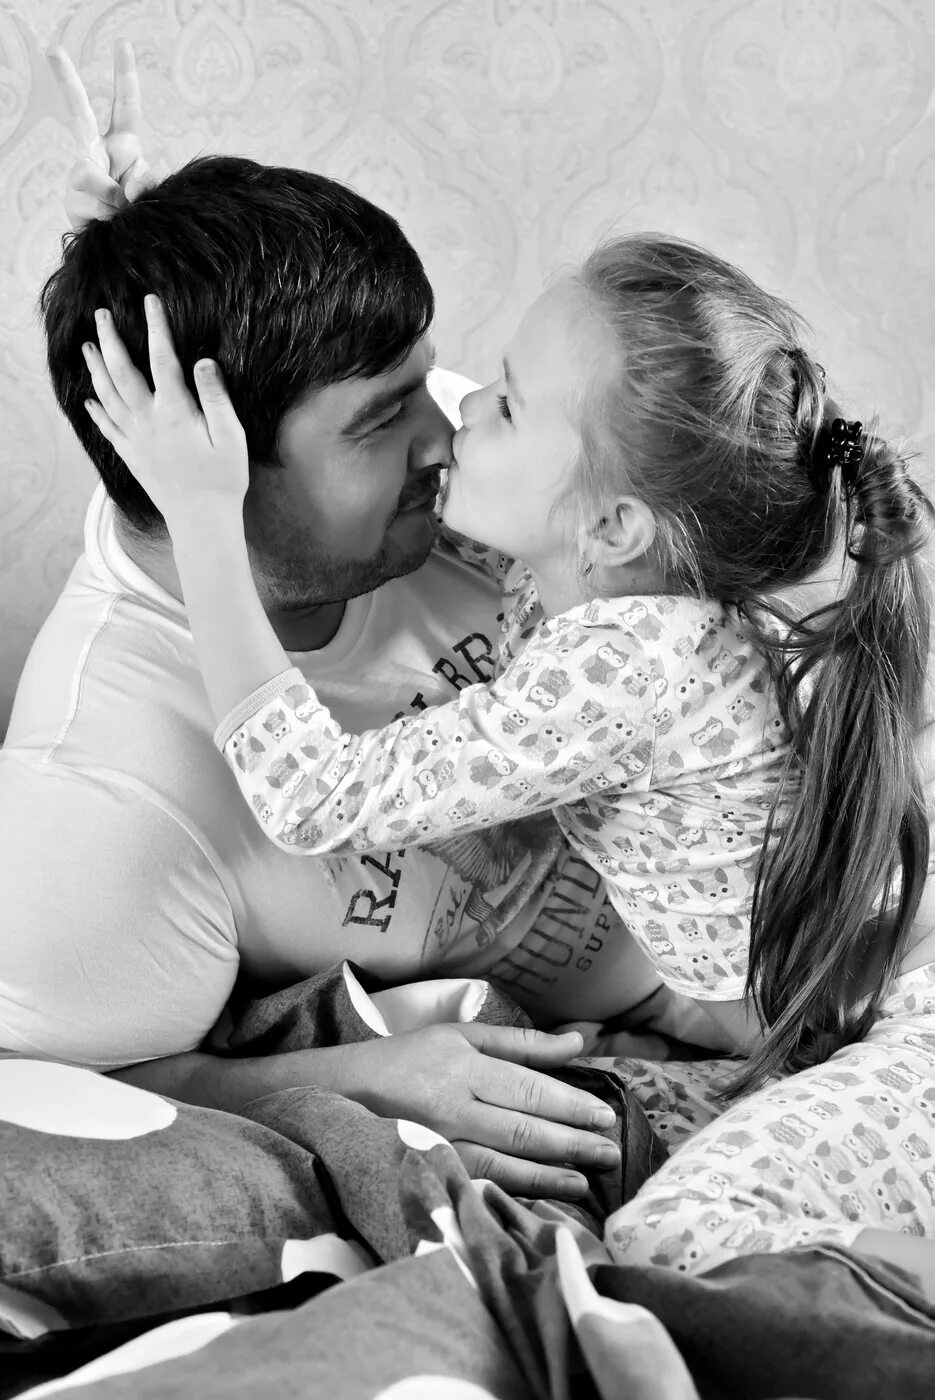 Папа целует дочку. Девочка целует папу. Соблазны для ребенка. Соблазн отца. Парно папа дочка